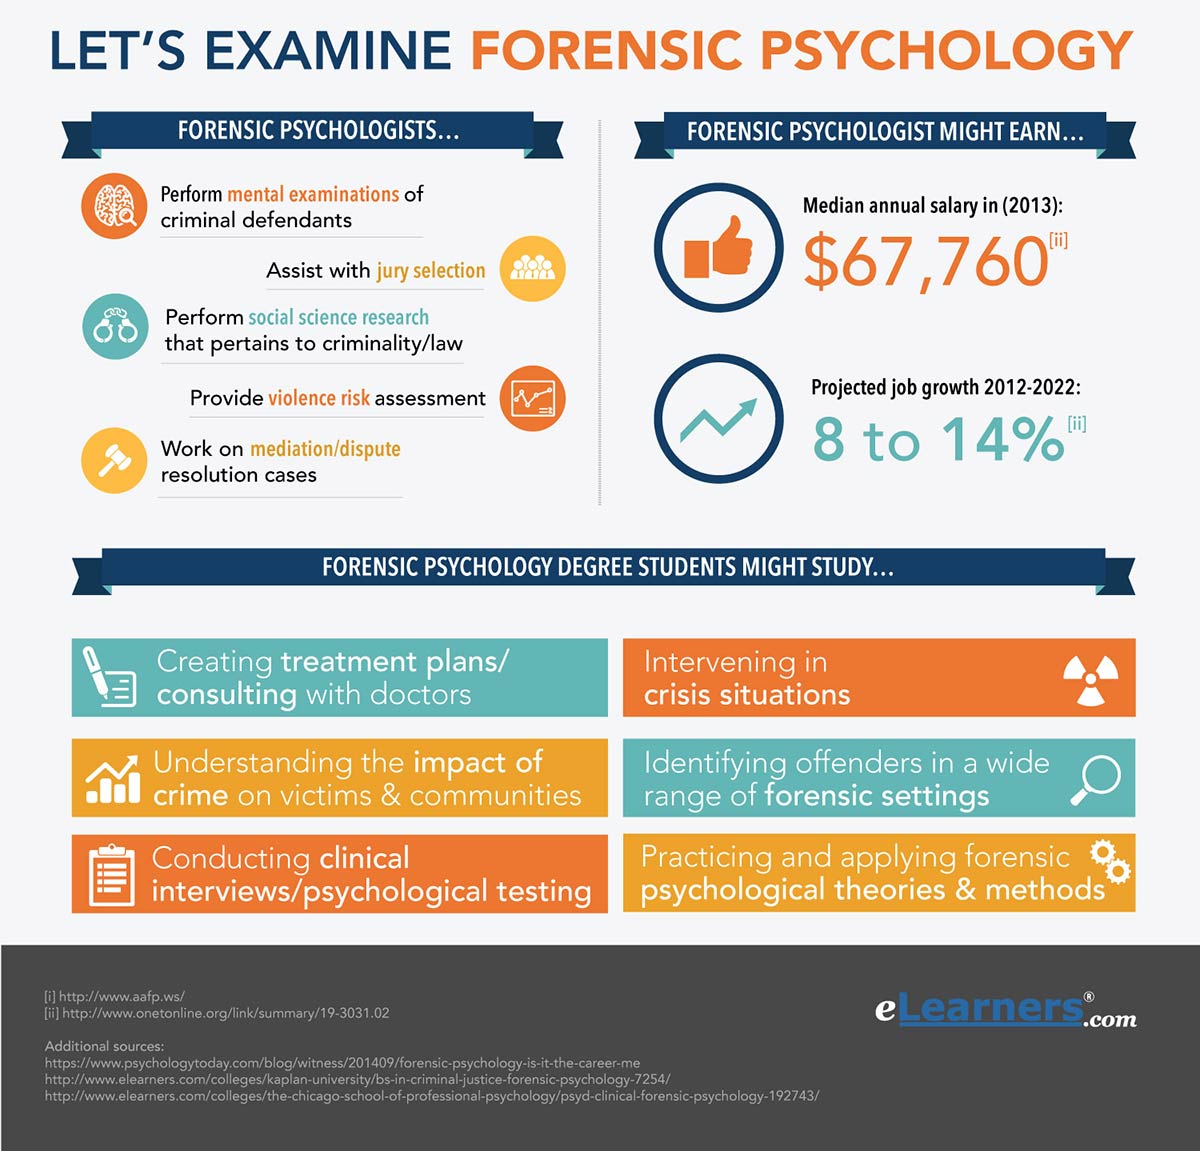 examining forensic psychology - Online Forensic Psychology Degree information